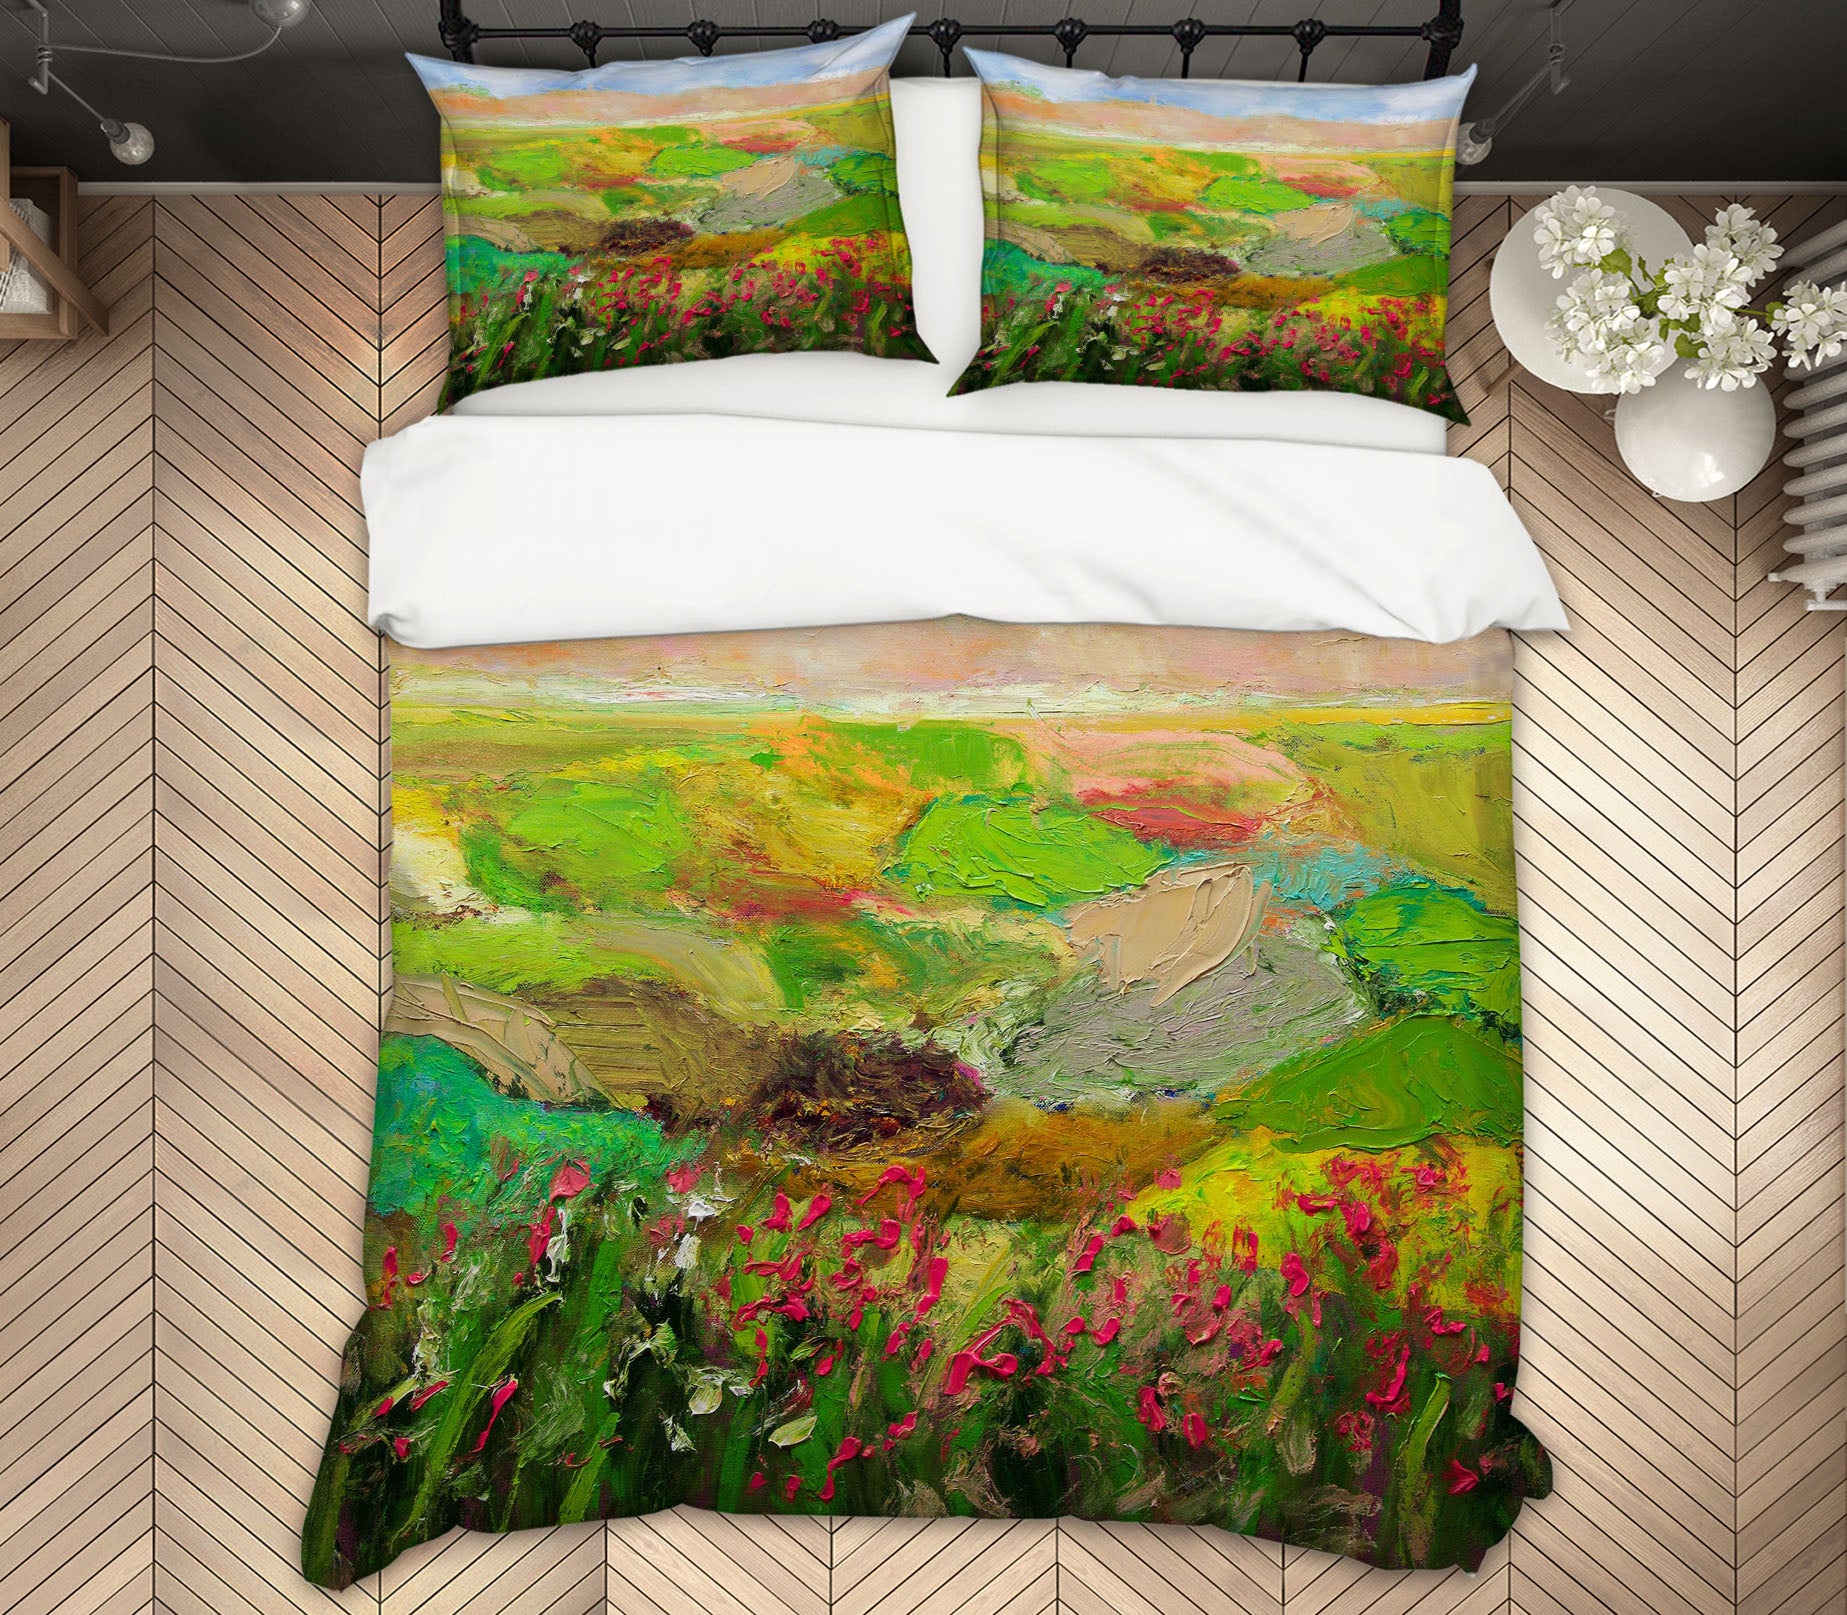 3D Red Roses 1119 Allan P. Friedlander Bedding Bed Pillowcases Quilt